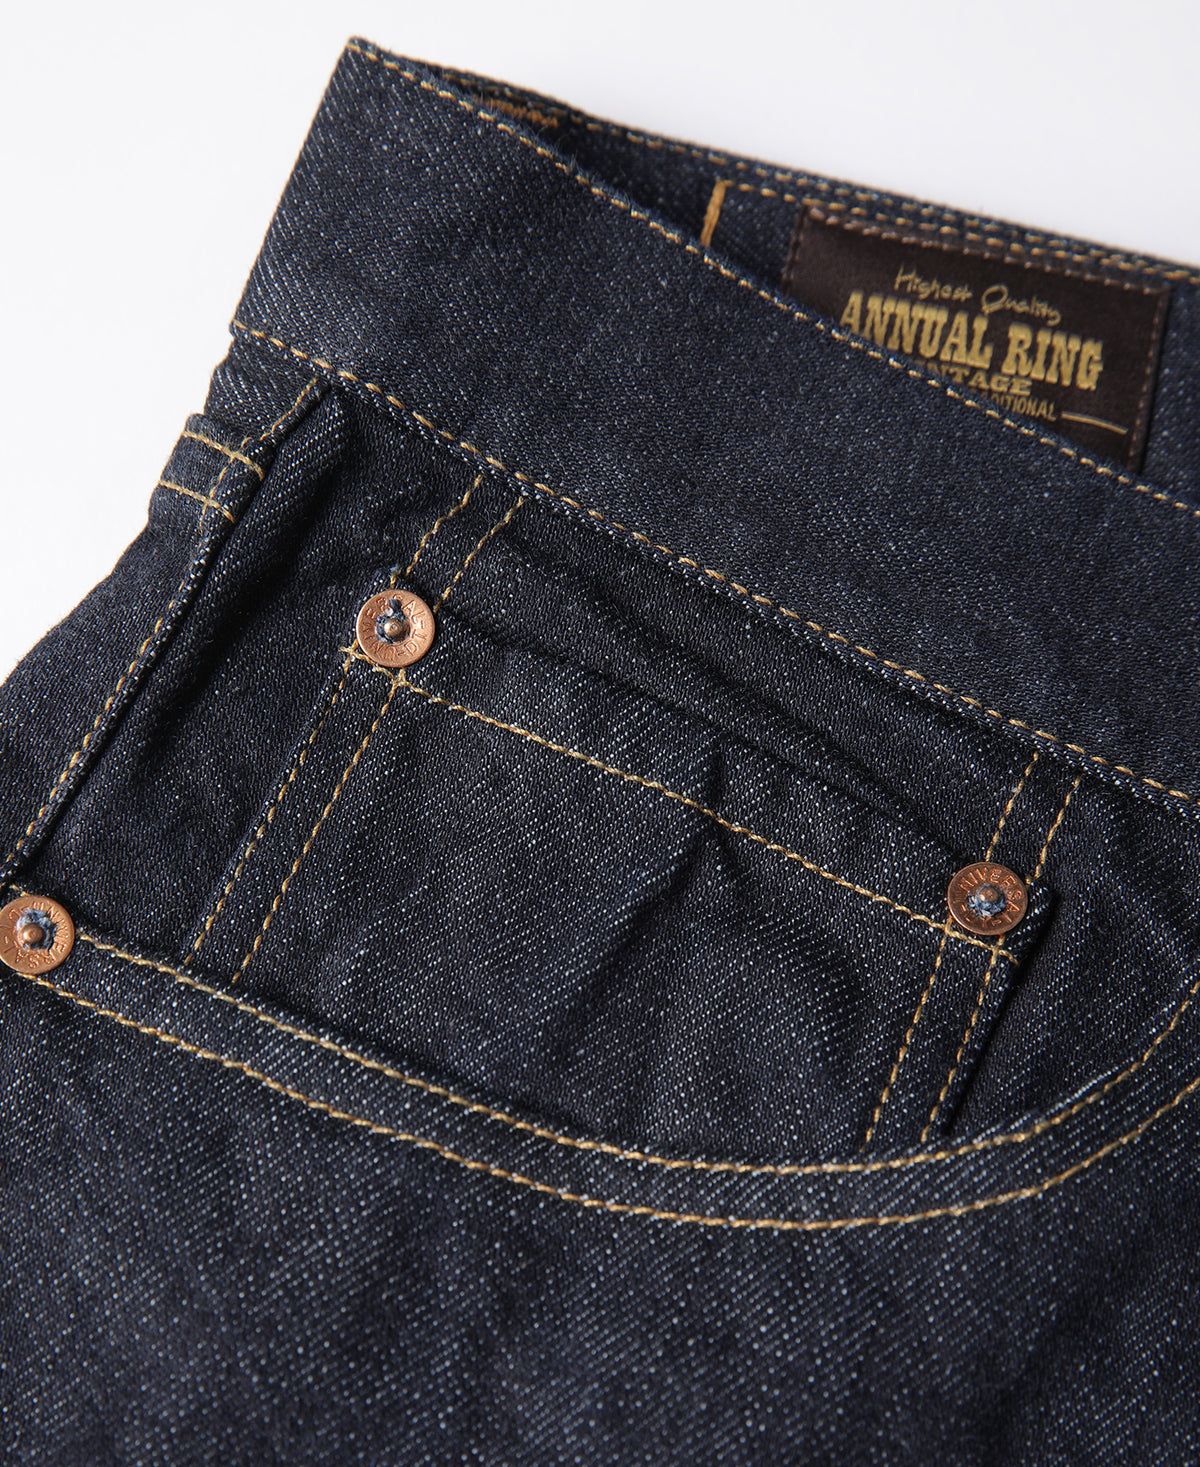 14.5 oz Selvedge Denim Bootcut Jeans